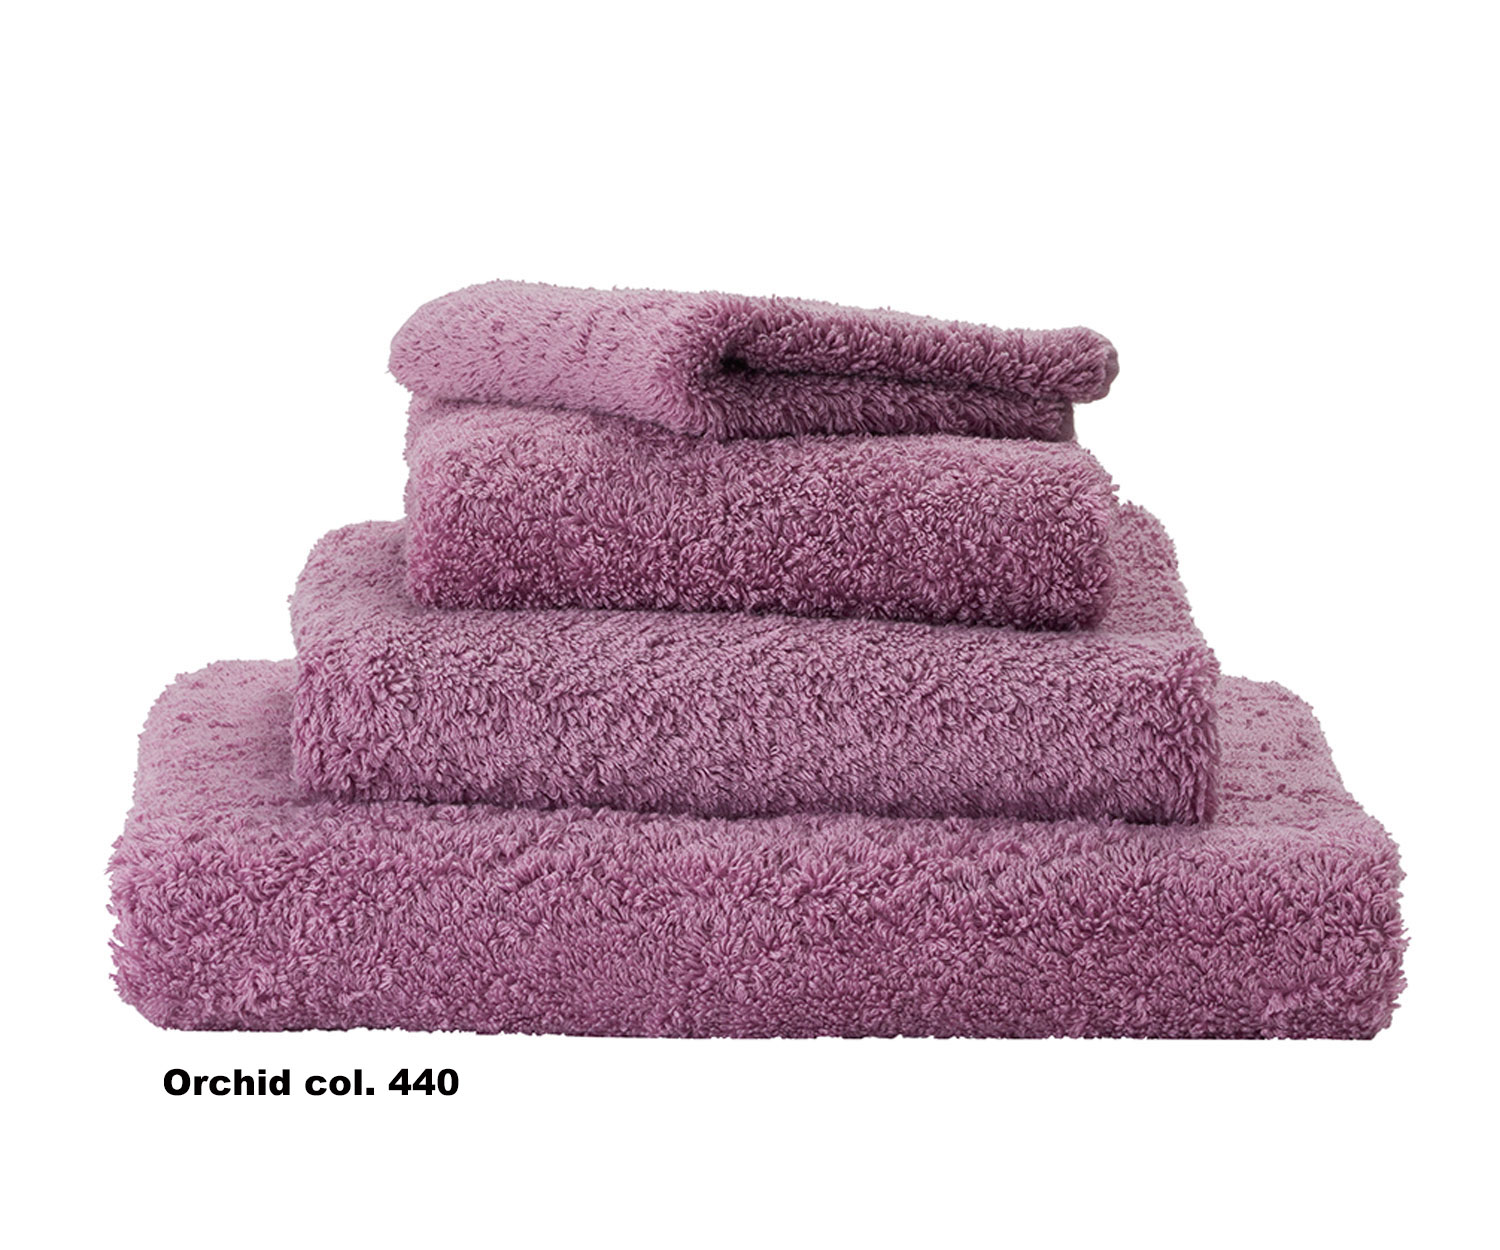 Abyss Super Pile Bath Towels and Mats - Aqua (210)  Egyptian cotton towels,  Luxury towels, Reversible bath rugs